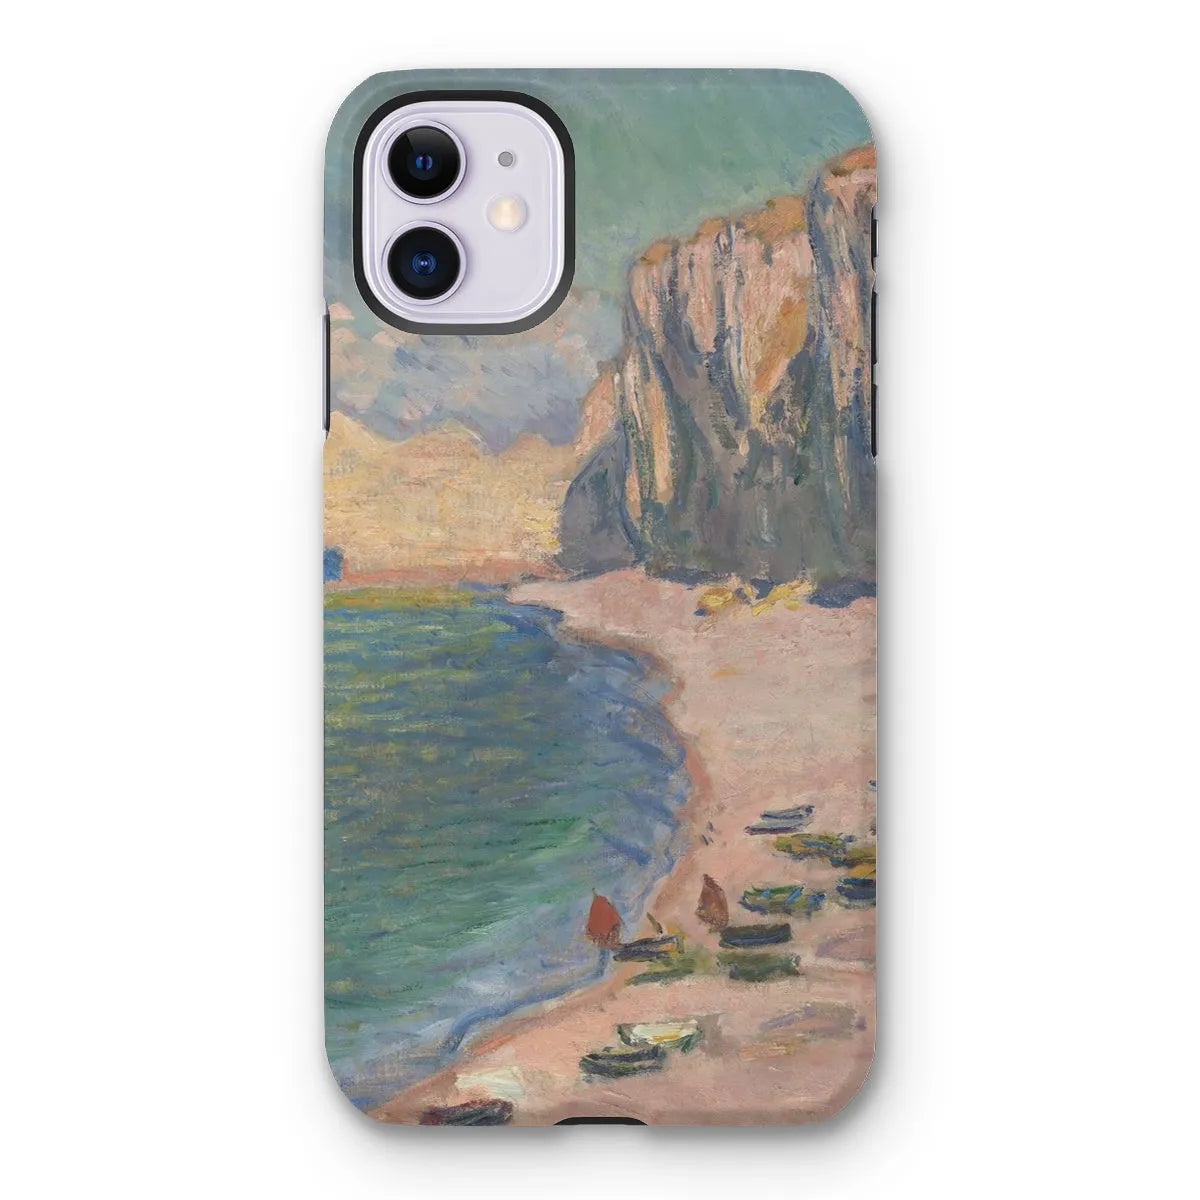 étretat - Impressionist Art Phone Case - Claude Monet - Iphone 11 / Matte - Mobile Phone Cases - Aesthetic Art